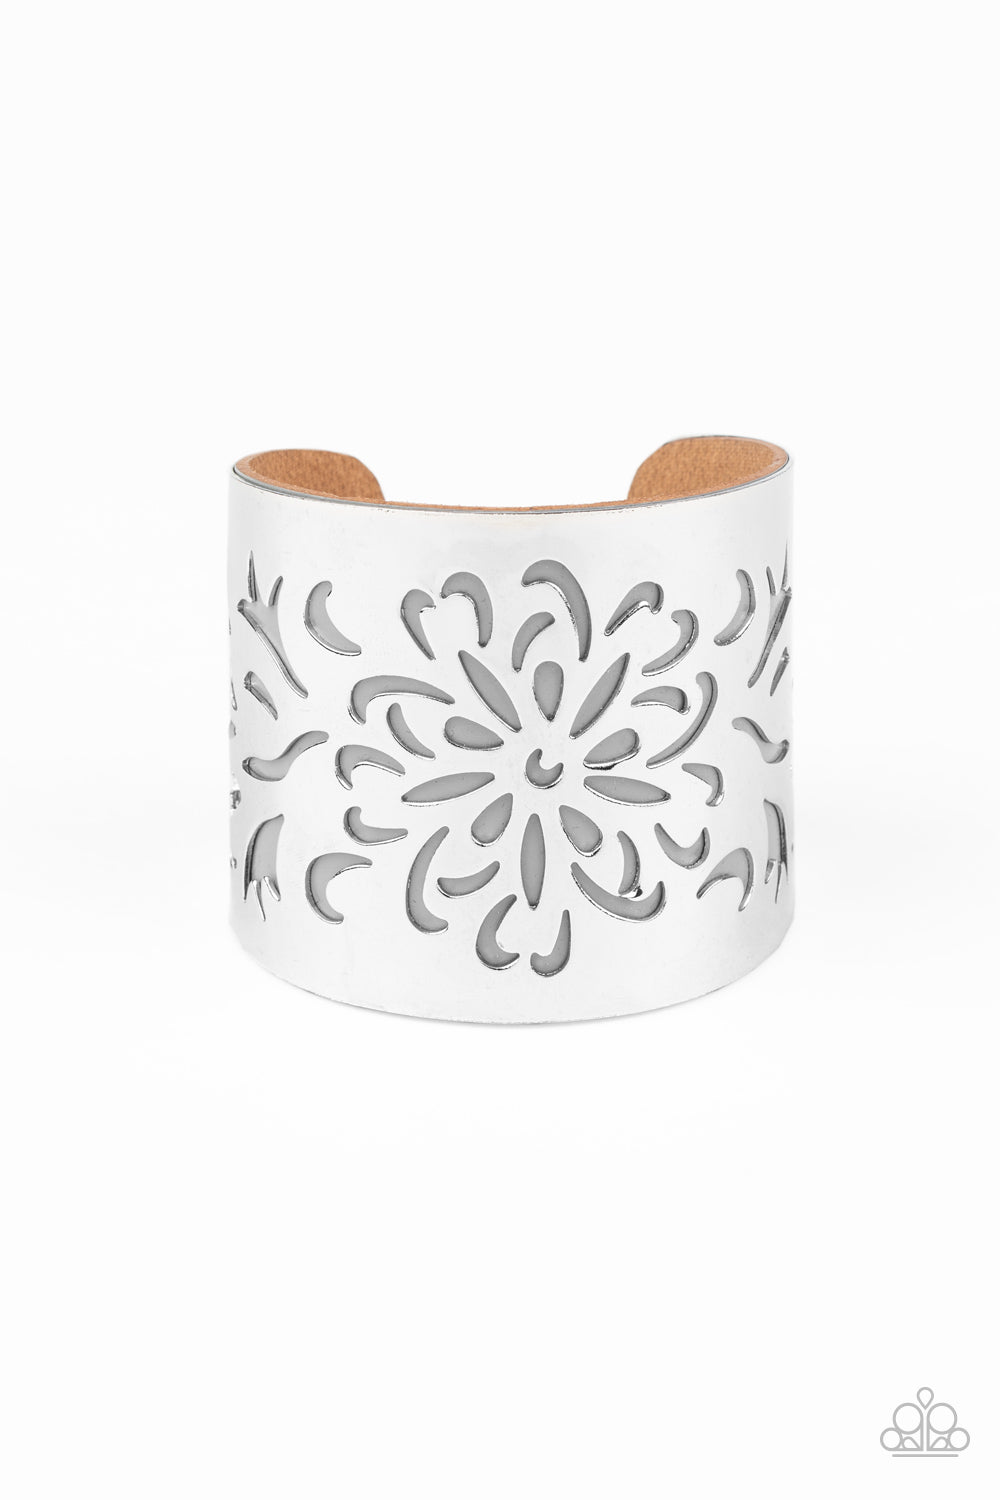 Get Your Bloom On - Silver Cuff Bracelet - Princess Glam Shop